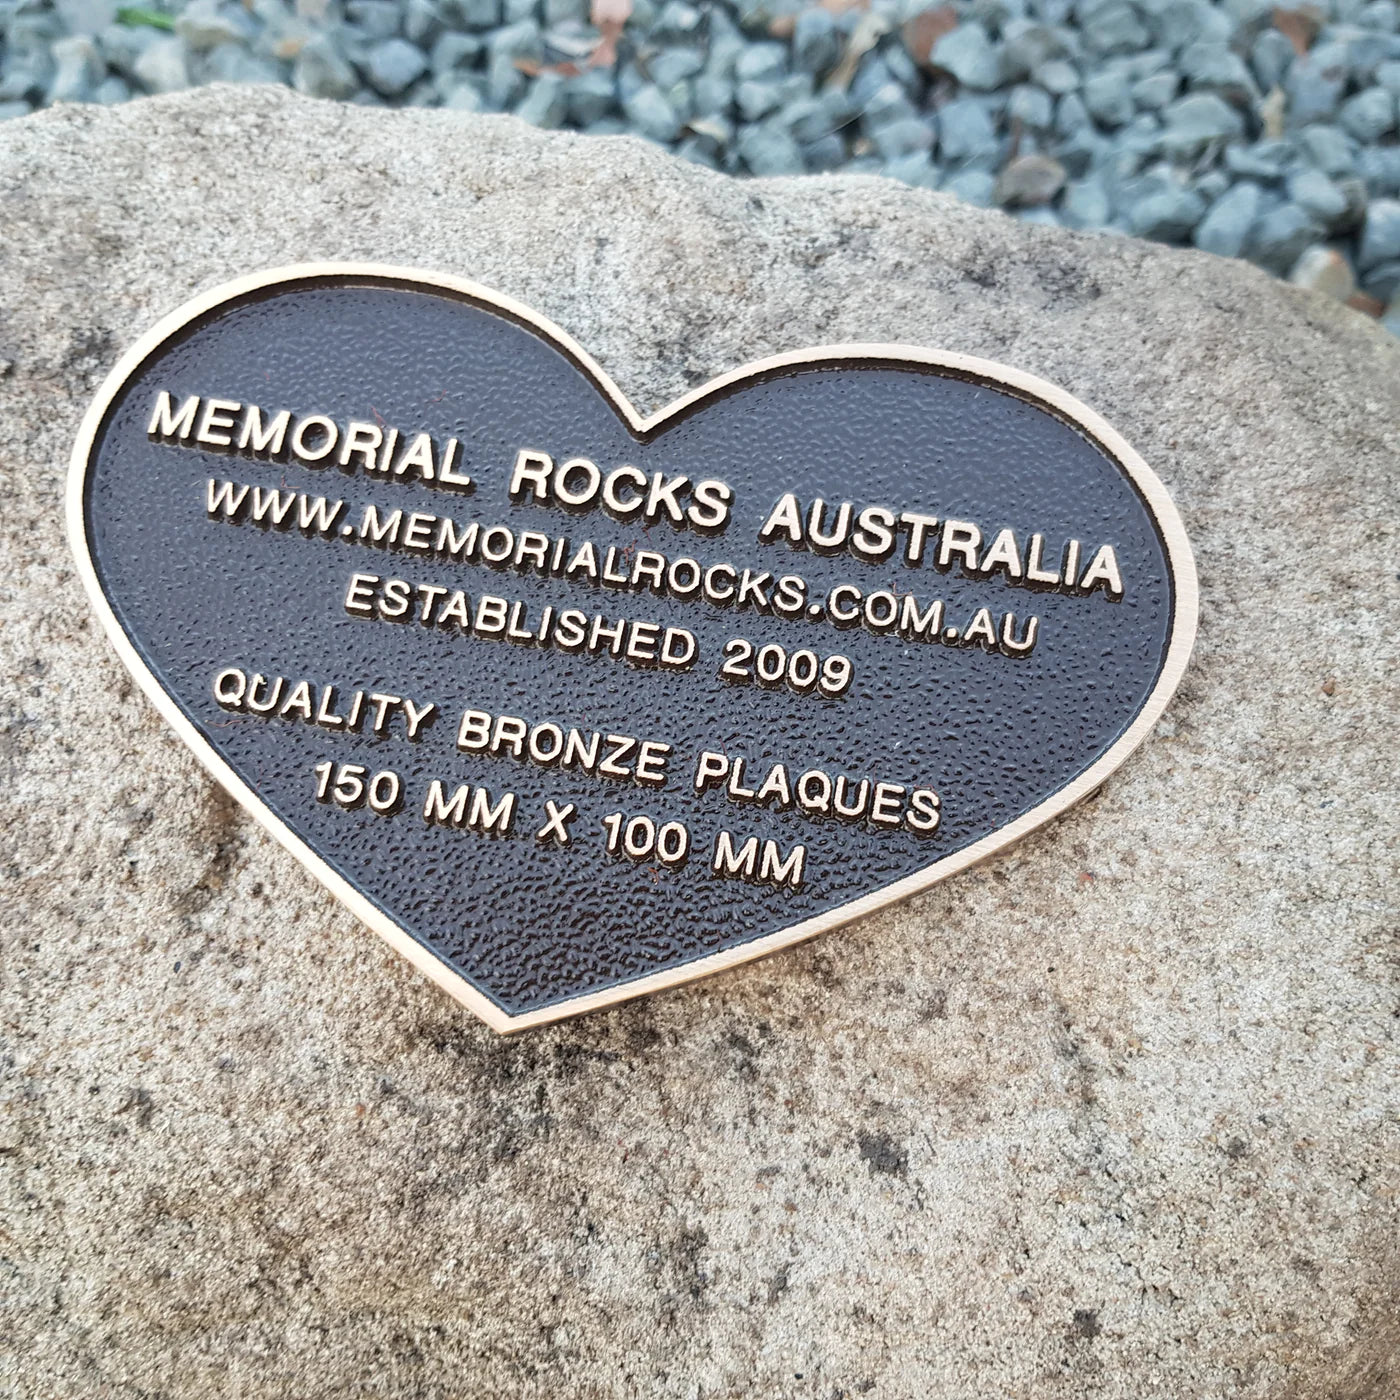 Quality Bronze Plaque for two names 380mm x 280mm – Memorial Rocks Australia